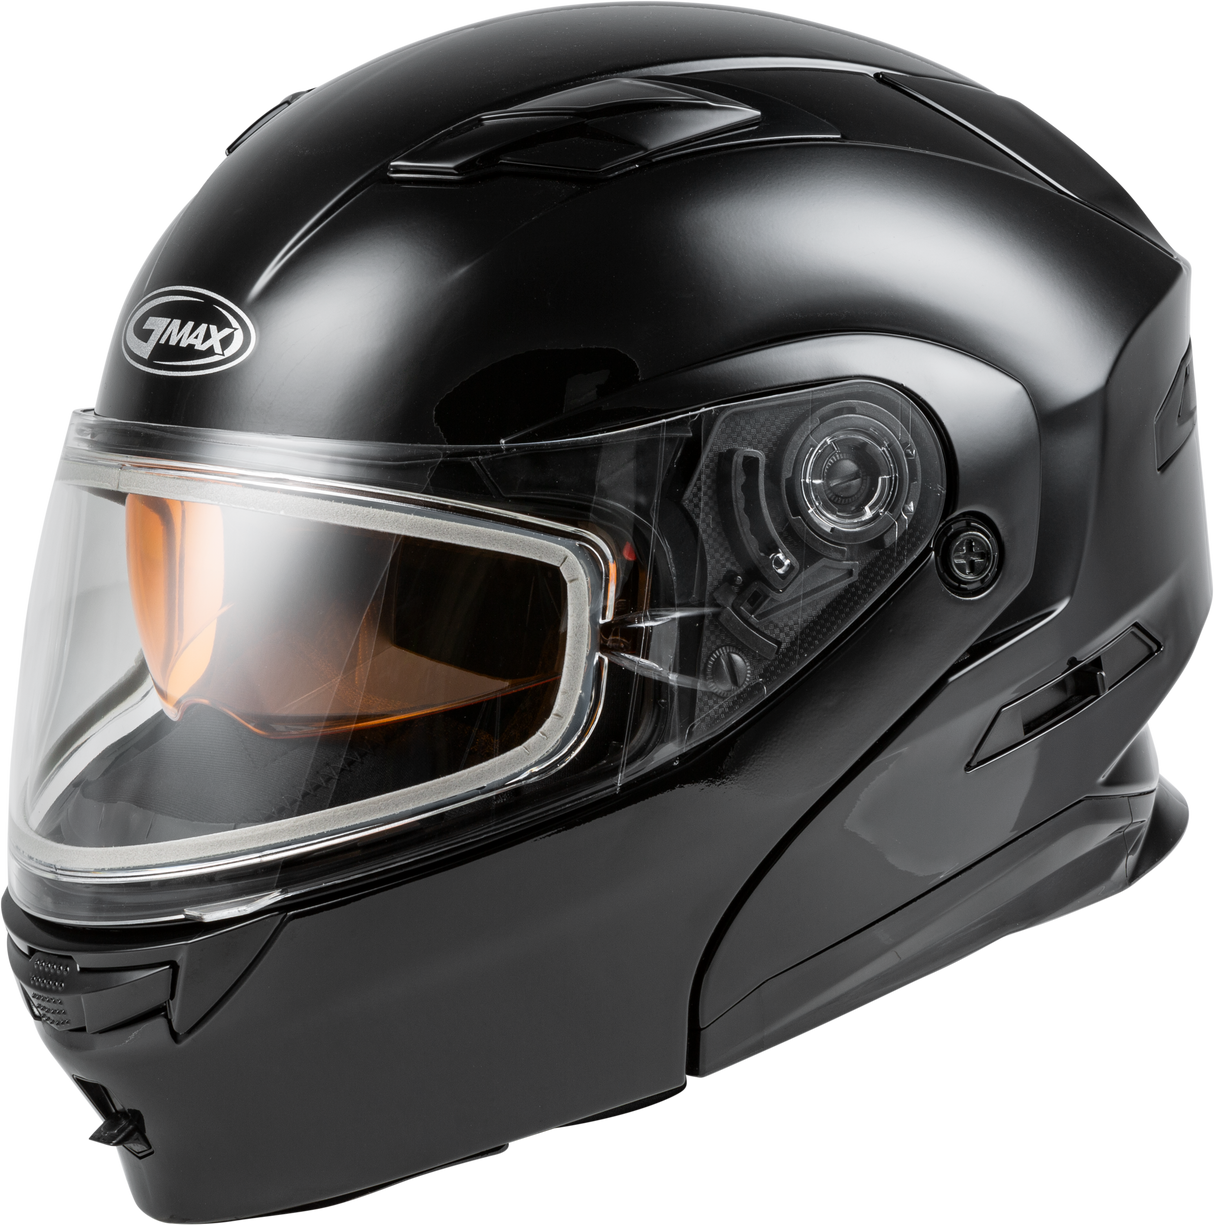 GMAX Md 01s Modular Snow Helmet Black Sm